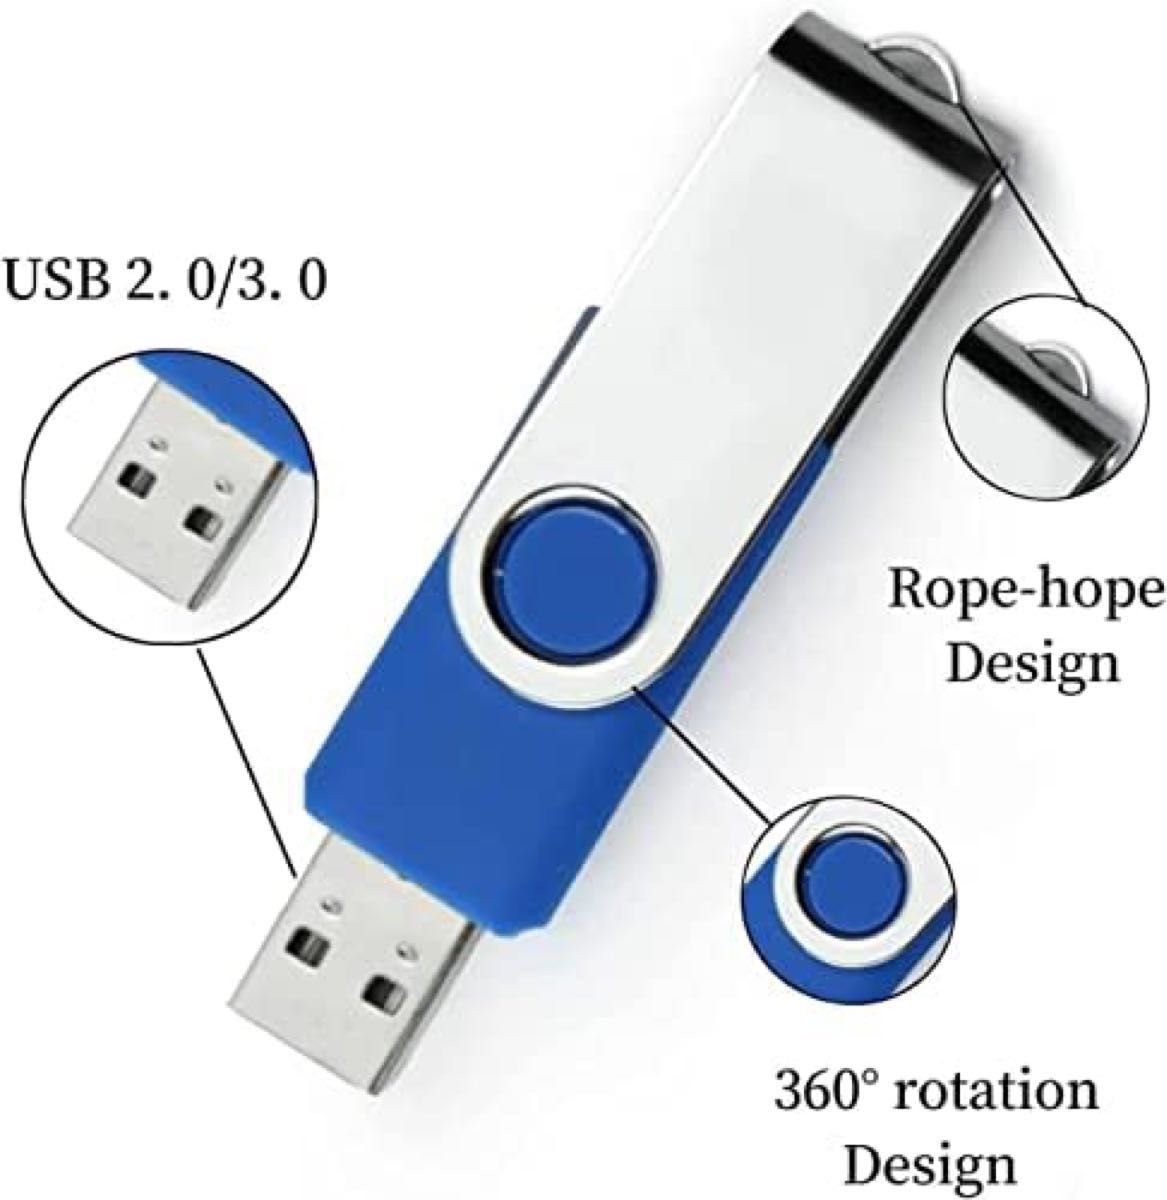 USBメモリ 64GB USB フラッシュドライブ フラッシュメモリ USBフラッシュメモリー メモリースティック 